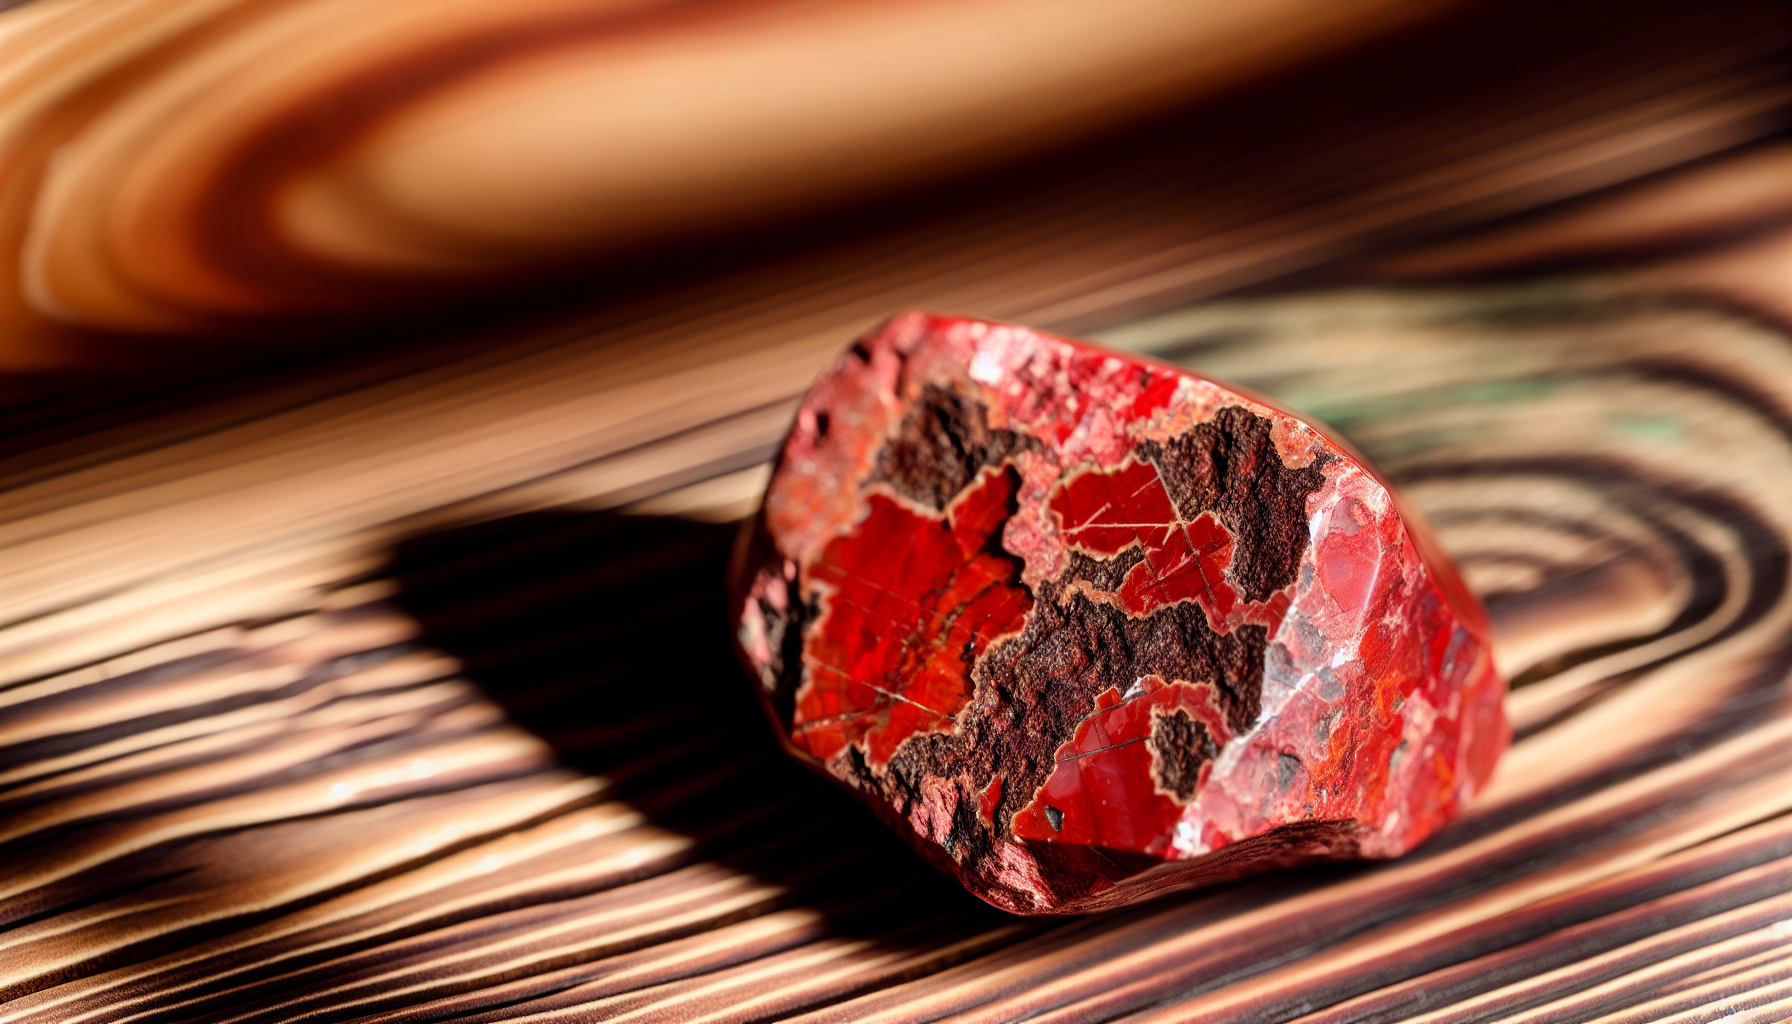 Red Jasper Crystal